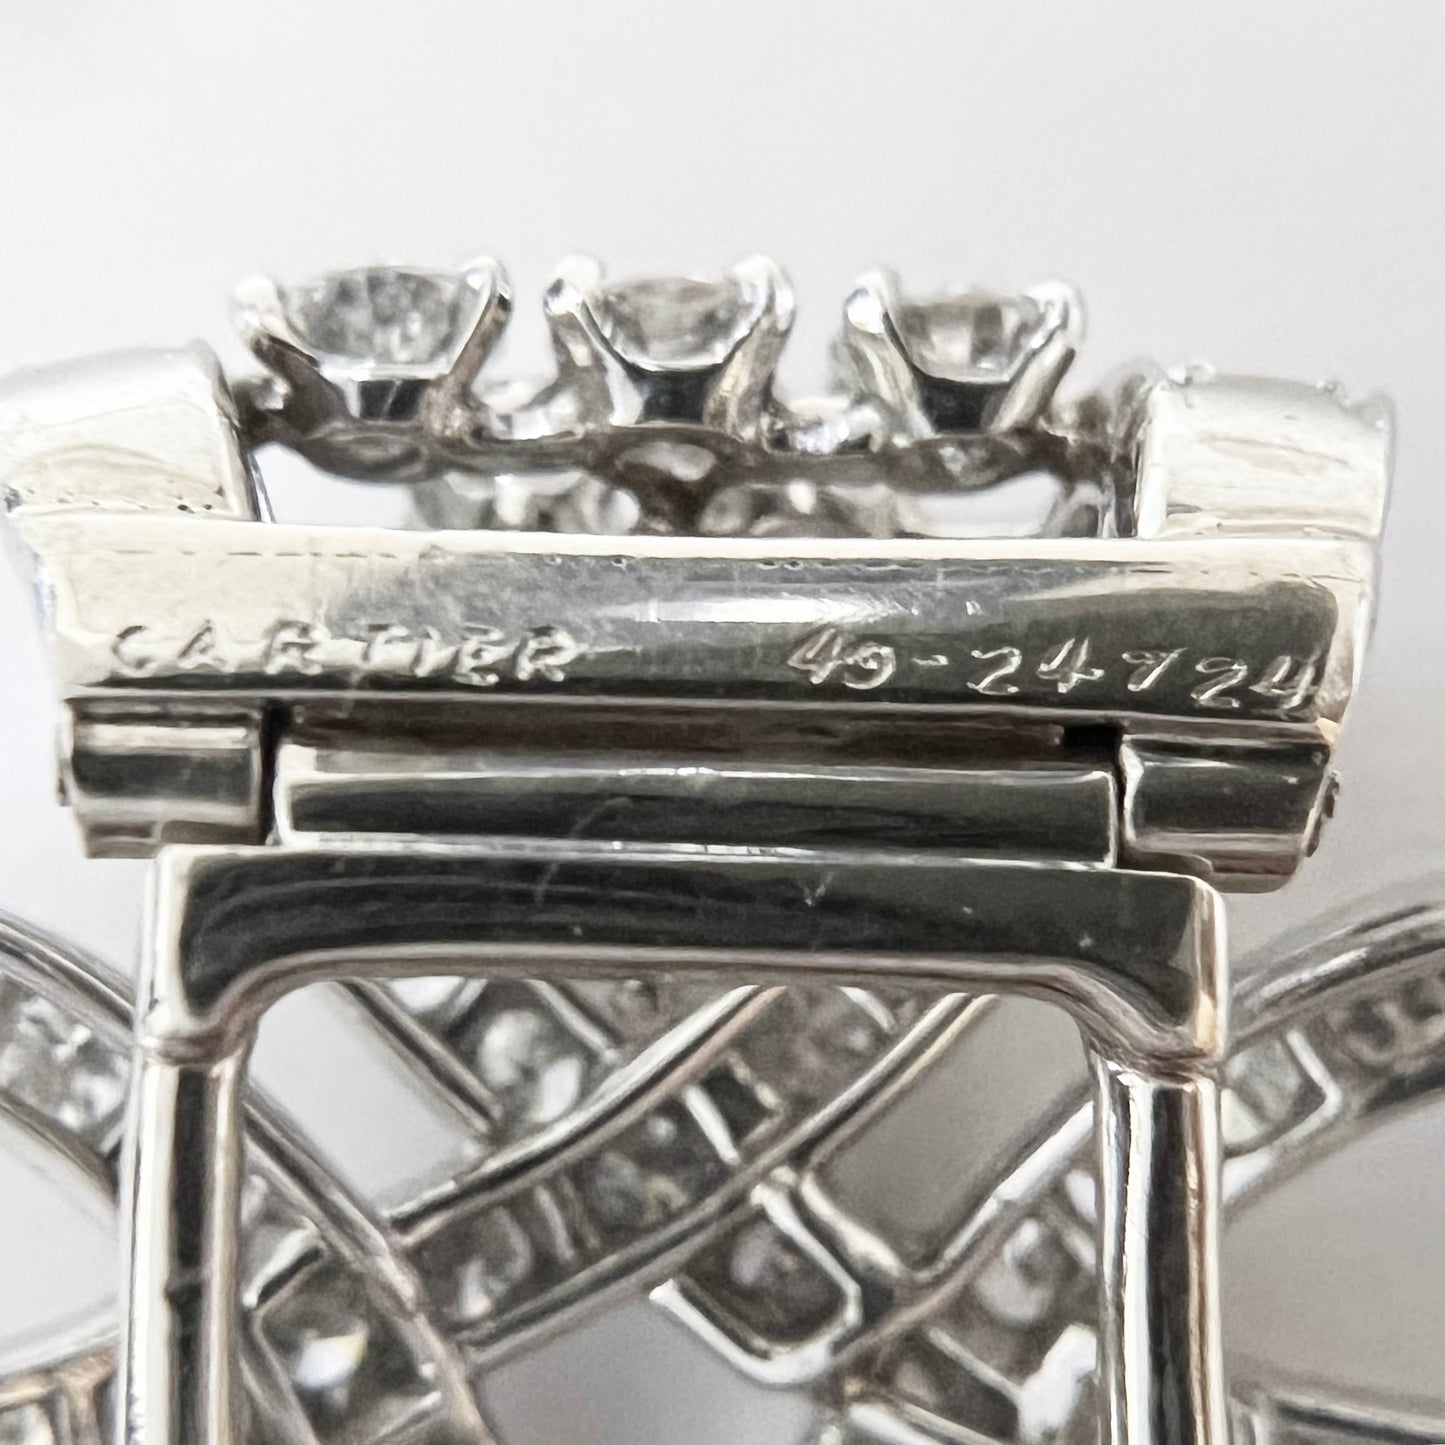 Cartier 1950s Platinum Diamond Brooch close-up details and signature